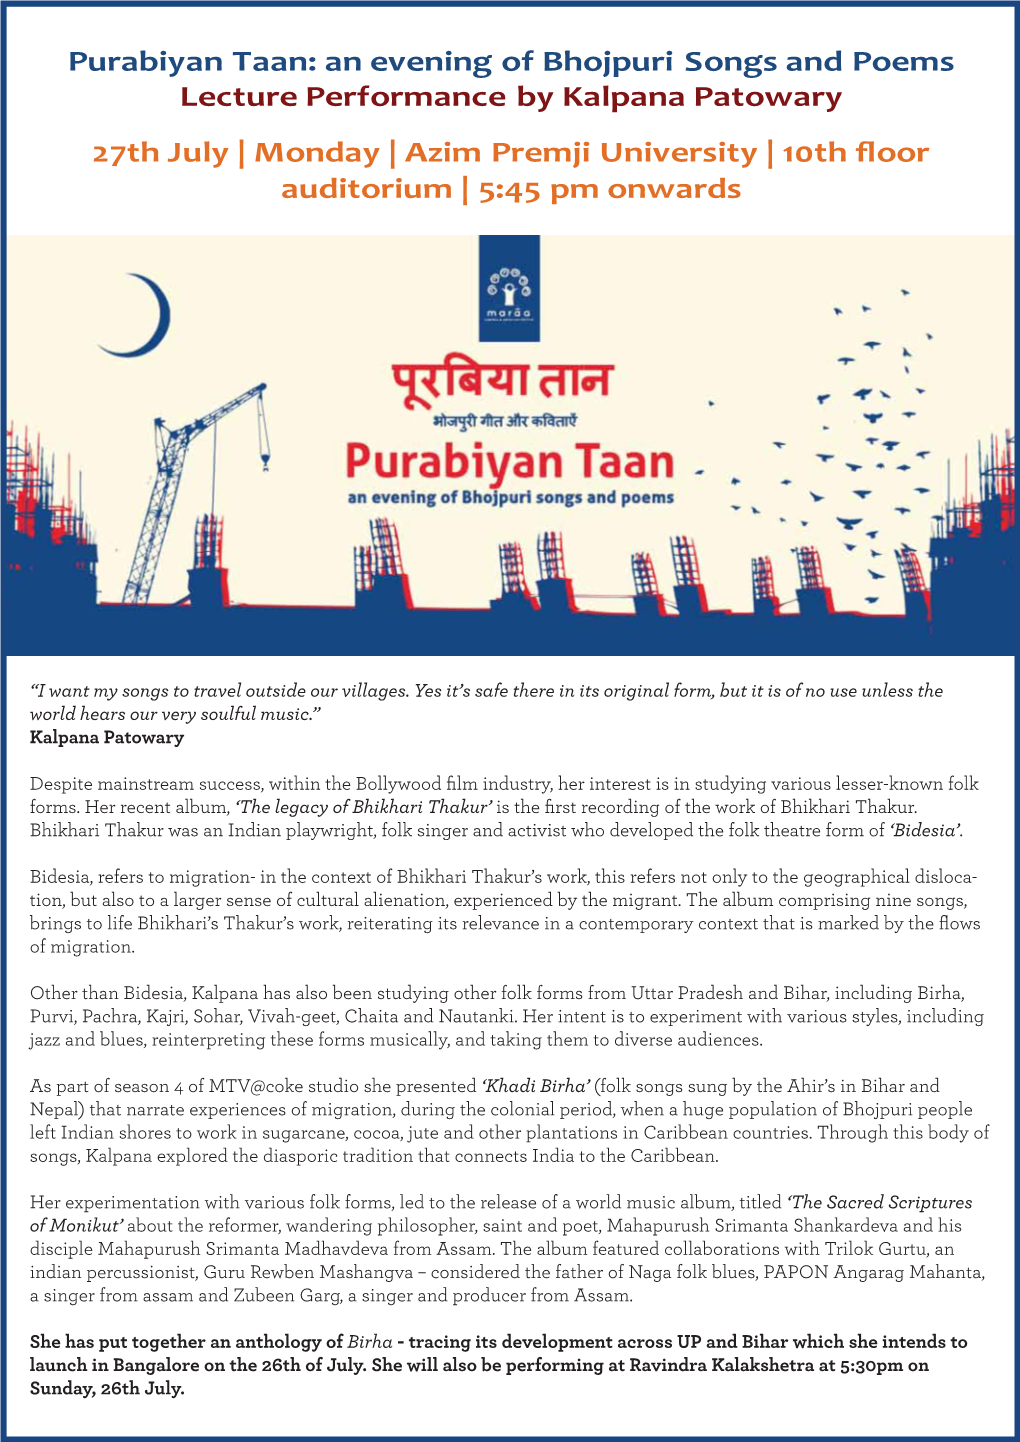 The Purabiyan Taan: an Evening of Bhojpuri Songs and Poems